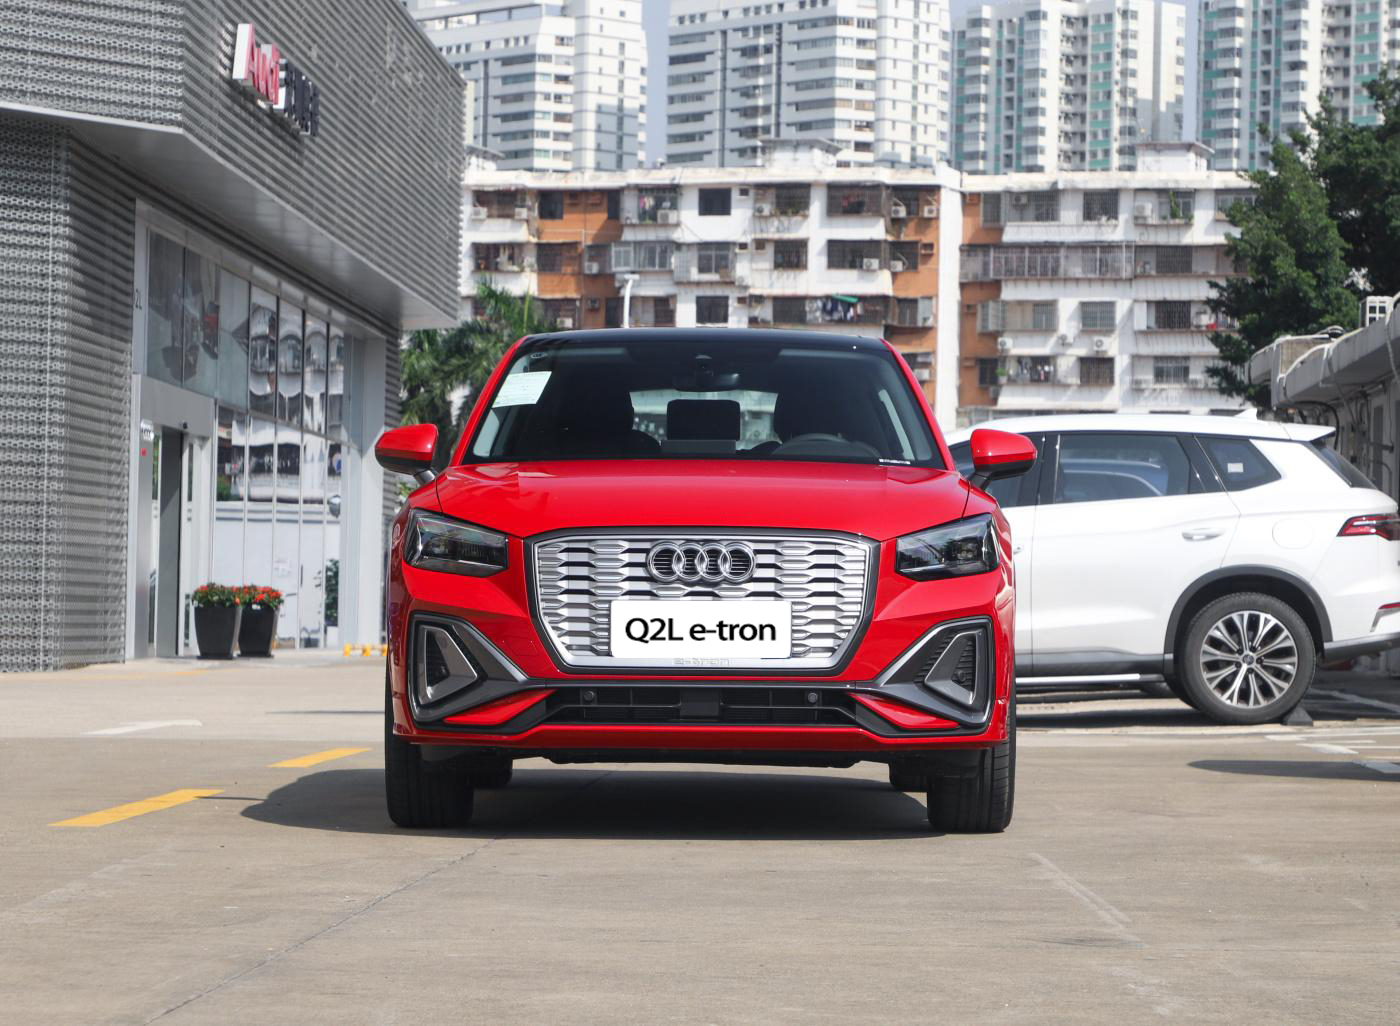 2022 Audi Q2L E-Tron Small SUV Support Export Trade in China - Audi - 1